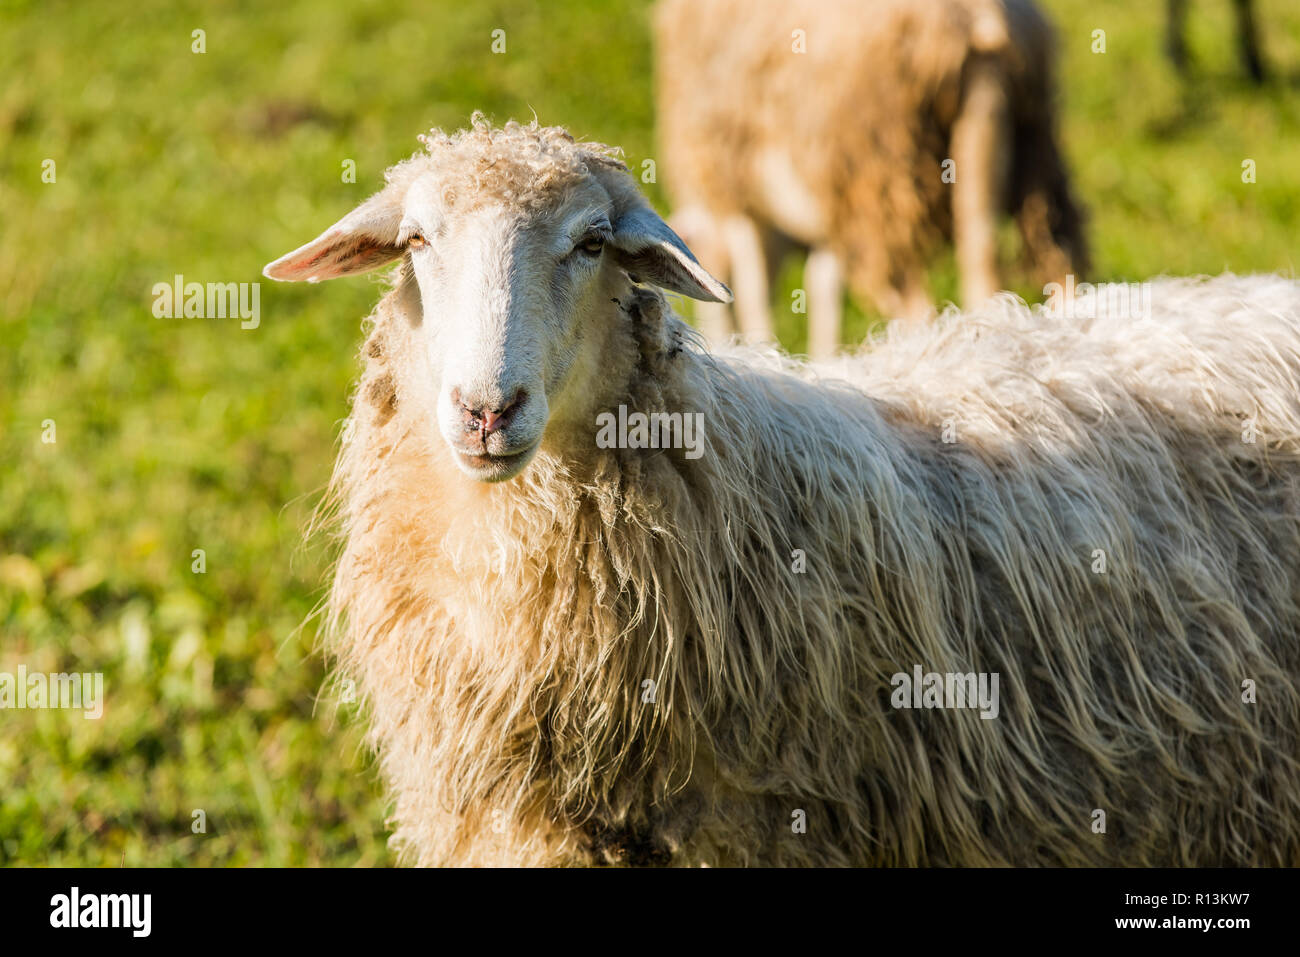 Sheep portrait, close up view. Stock Photo